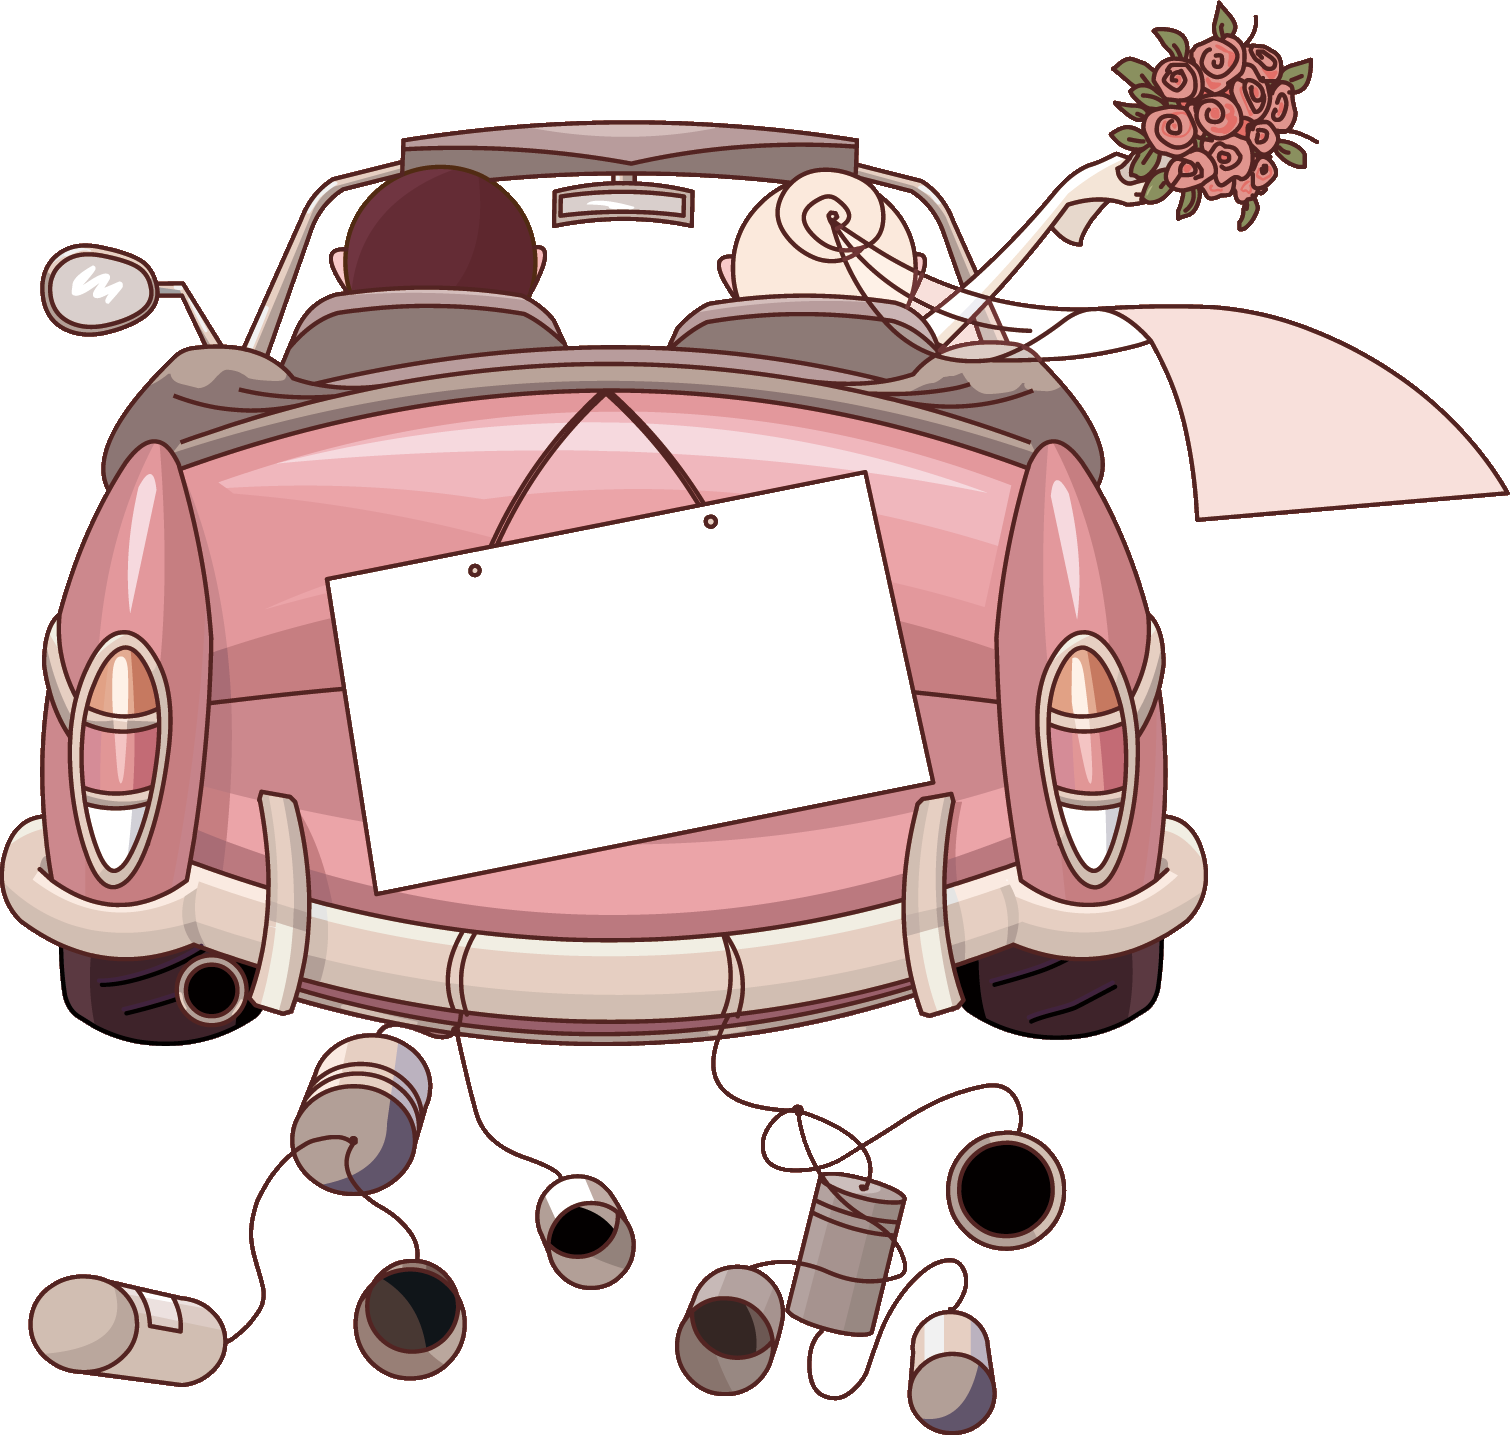 Just Married Car Illustration PNG image